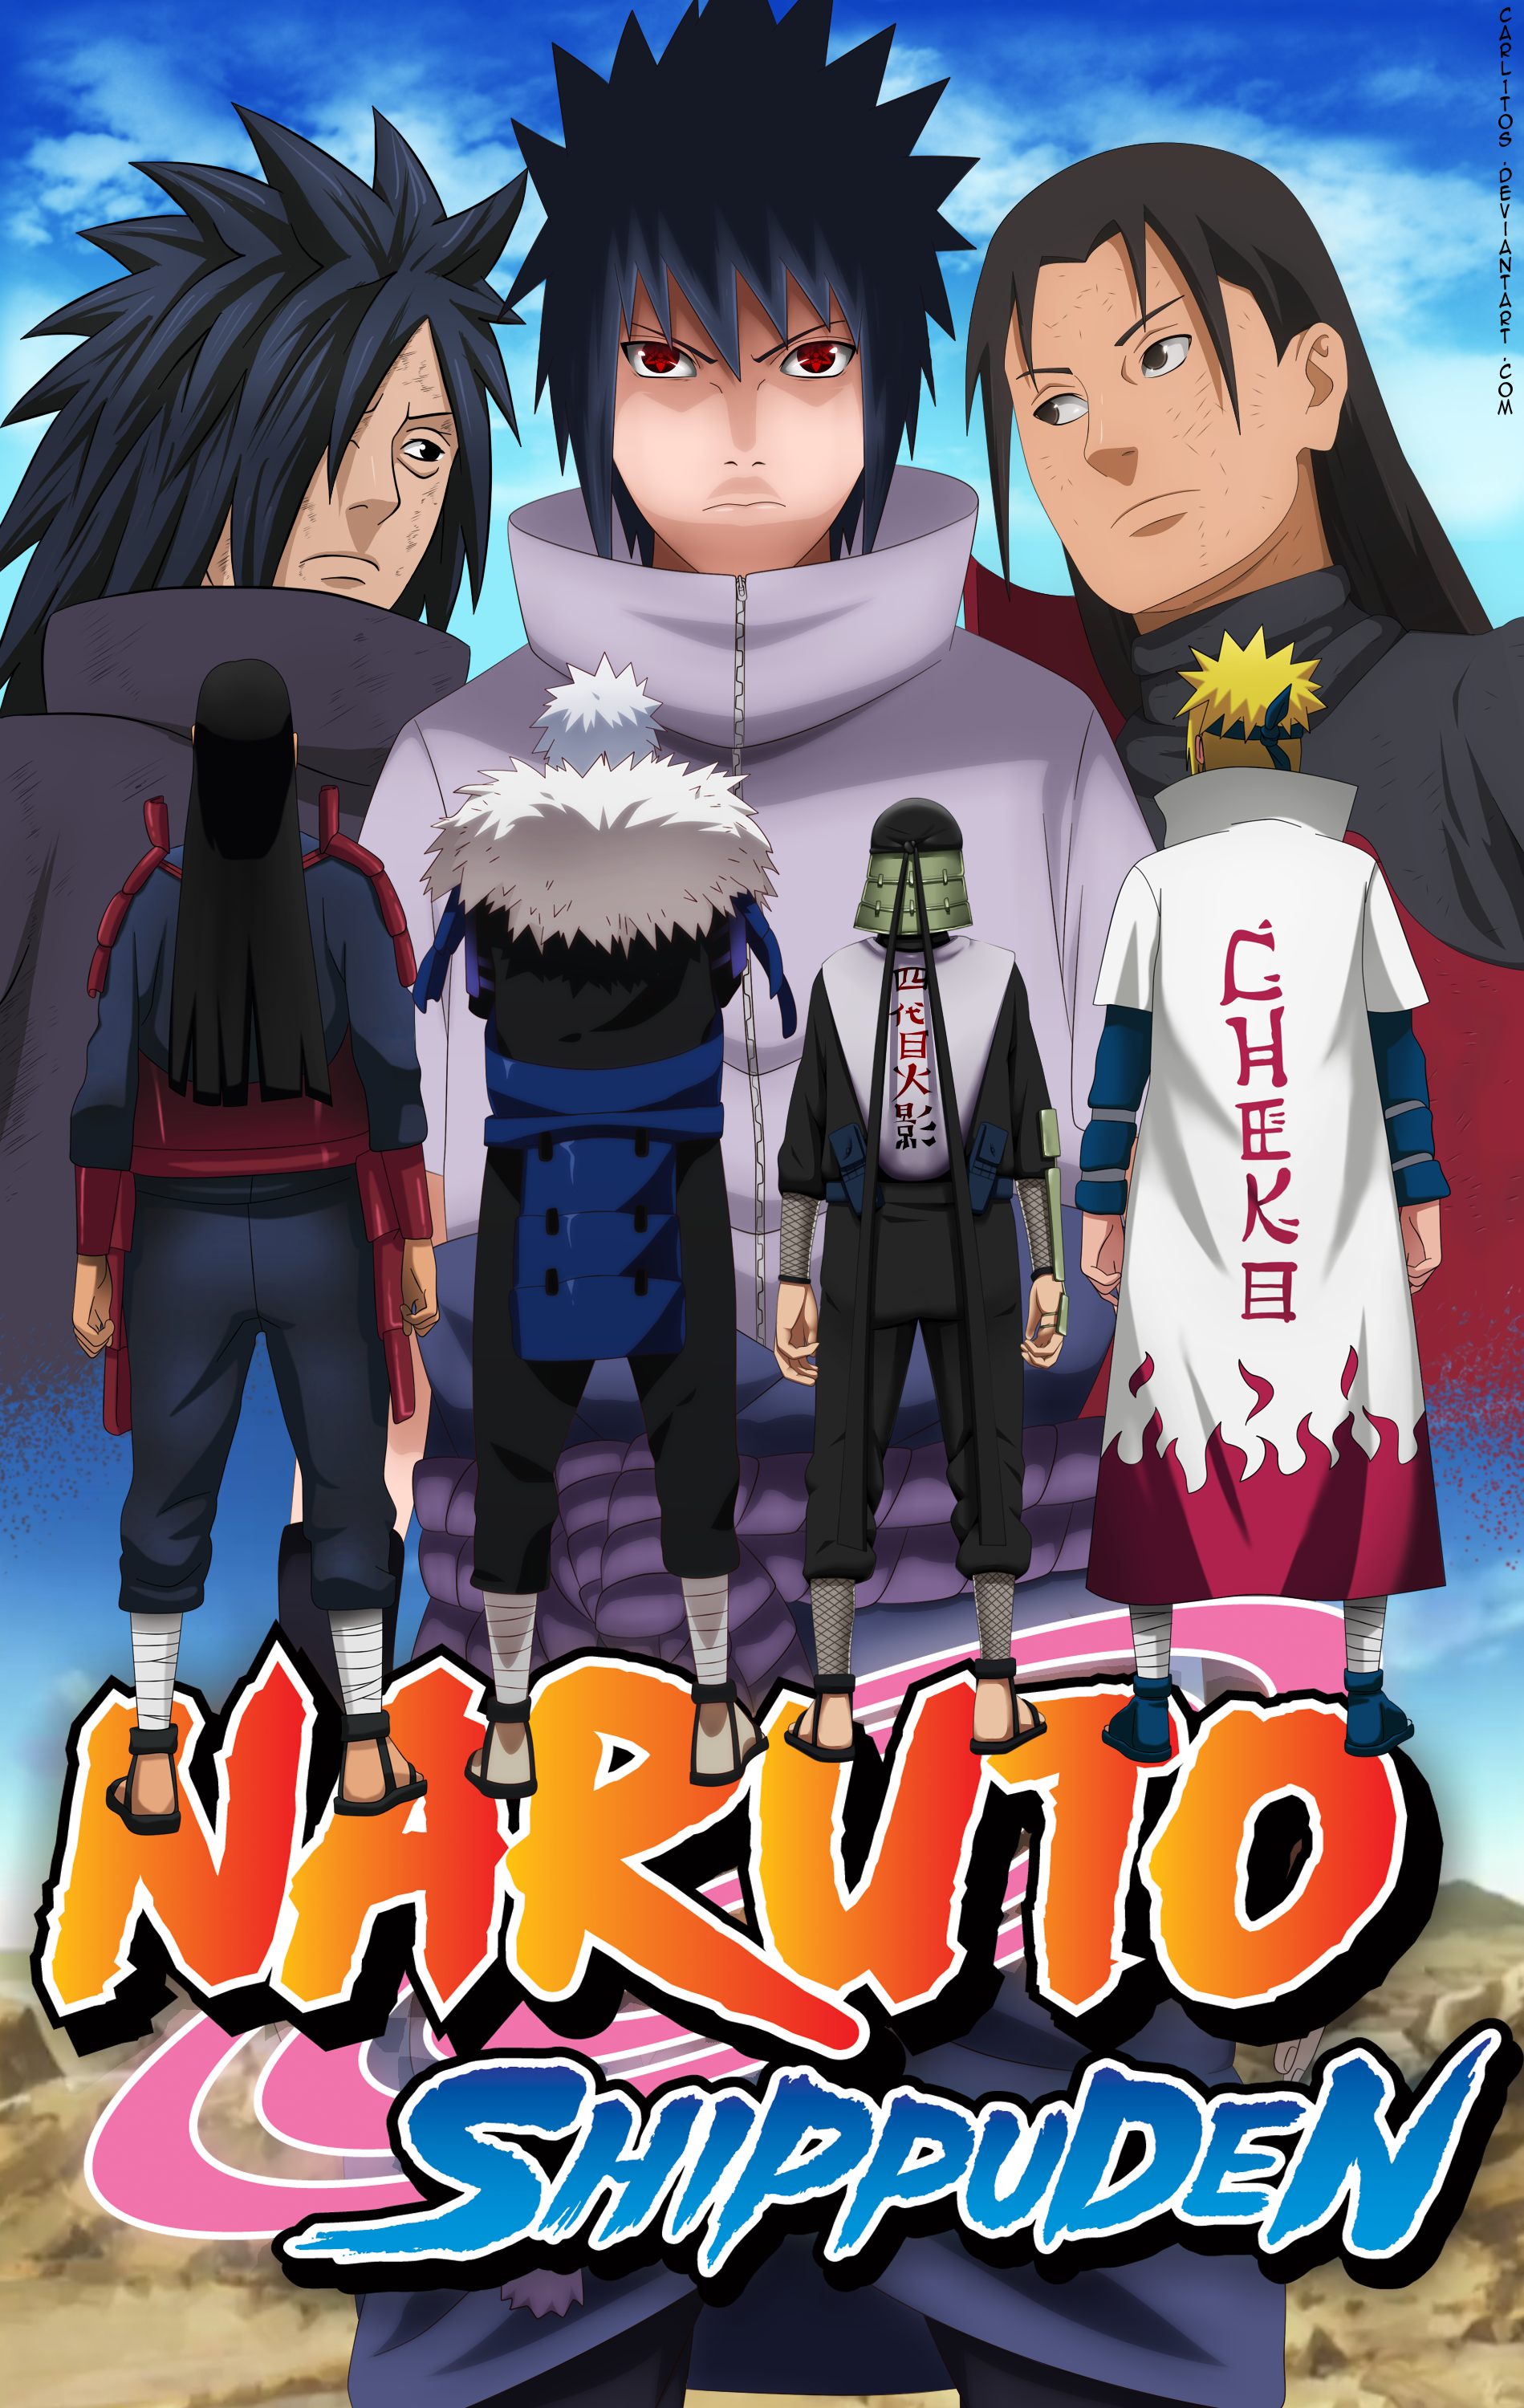 Takatsuki Reviews Naruto Shippuden الحلقة 459 مراجعة